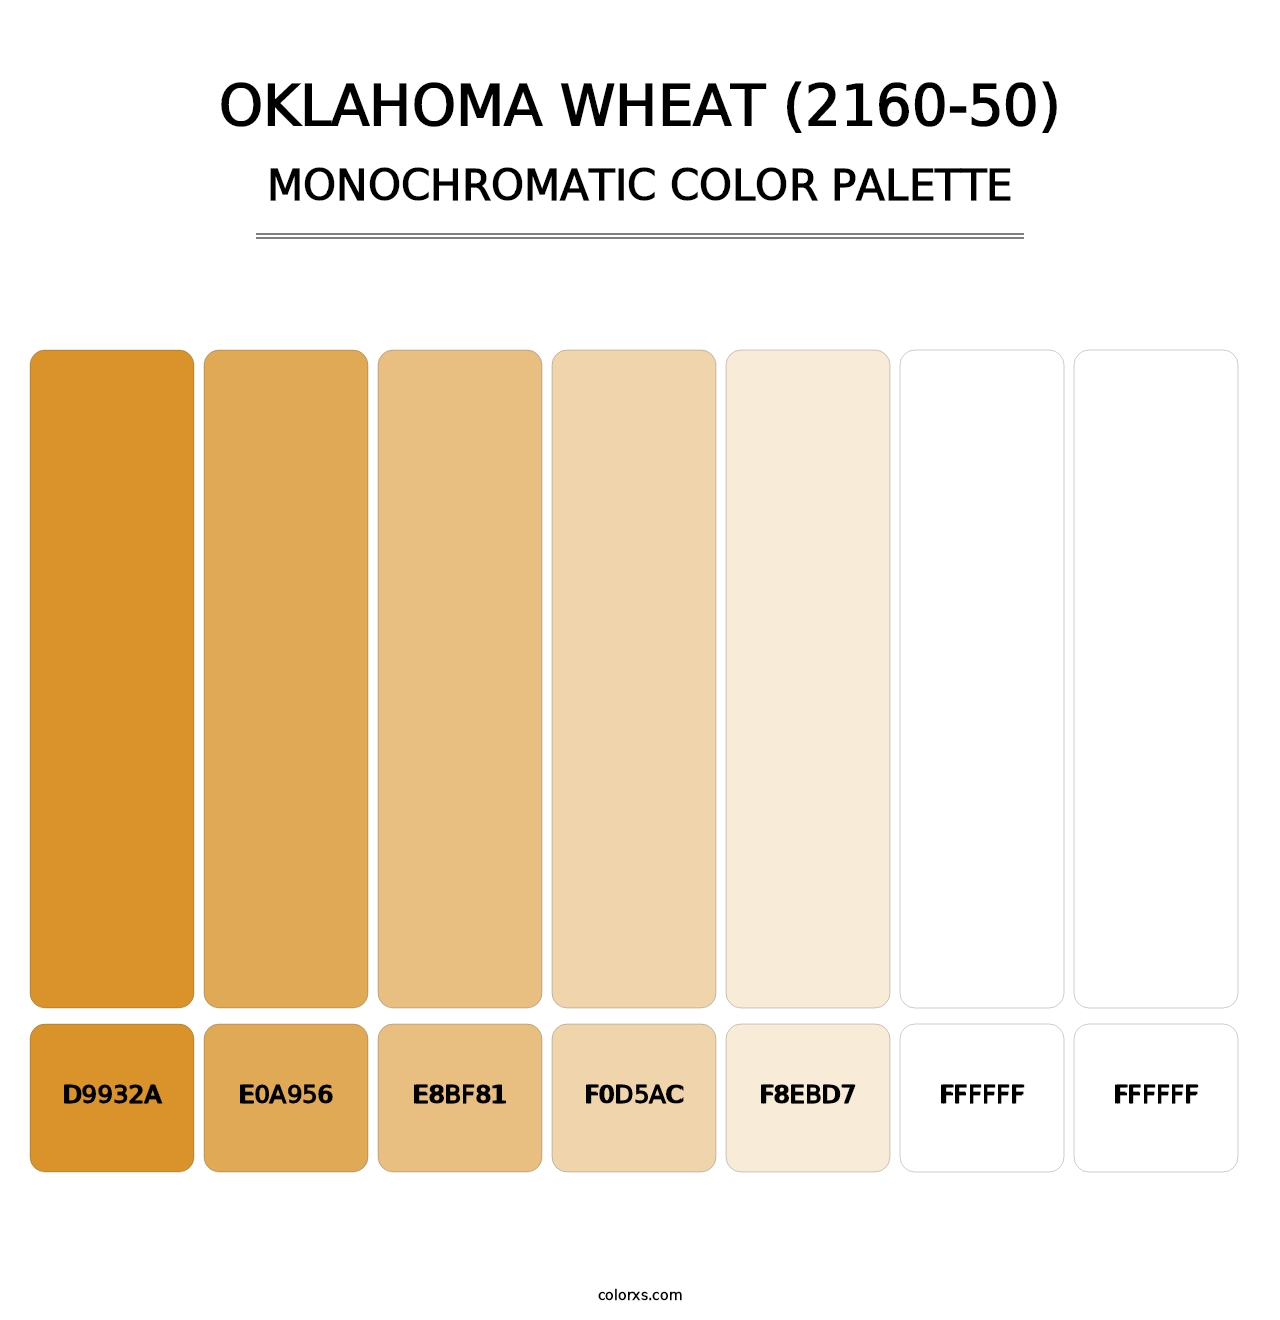 Oklahoma Wheat (2160-50) - Monochromatic Color Palette